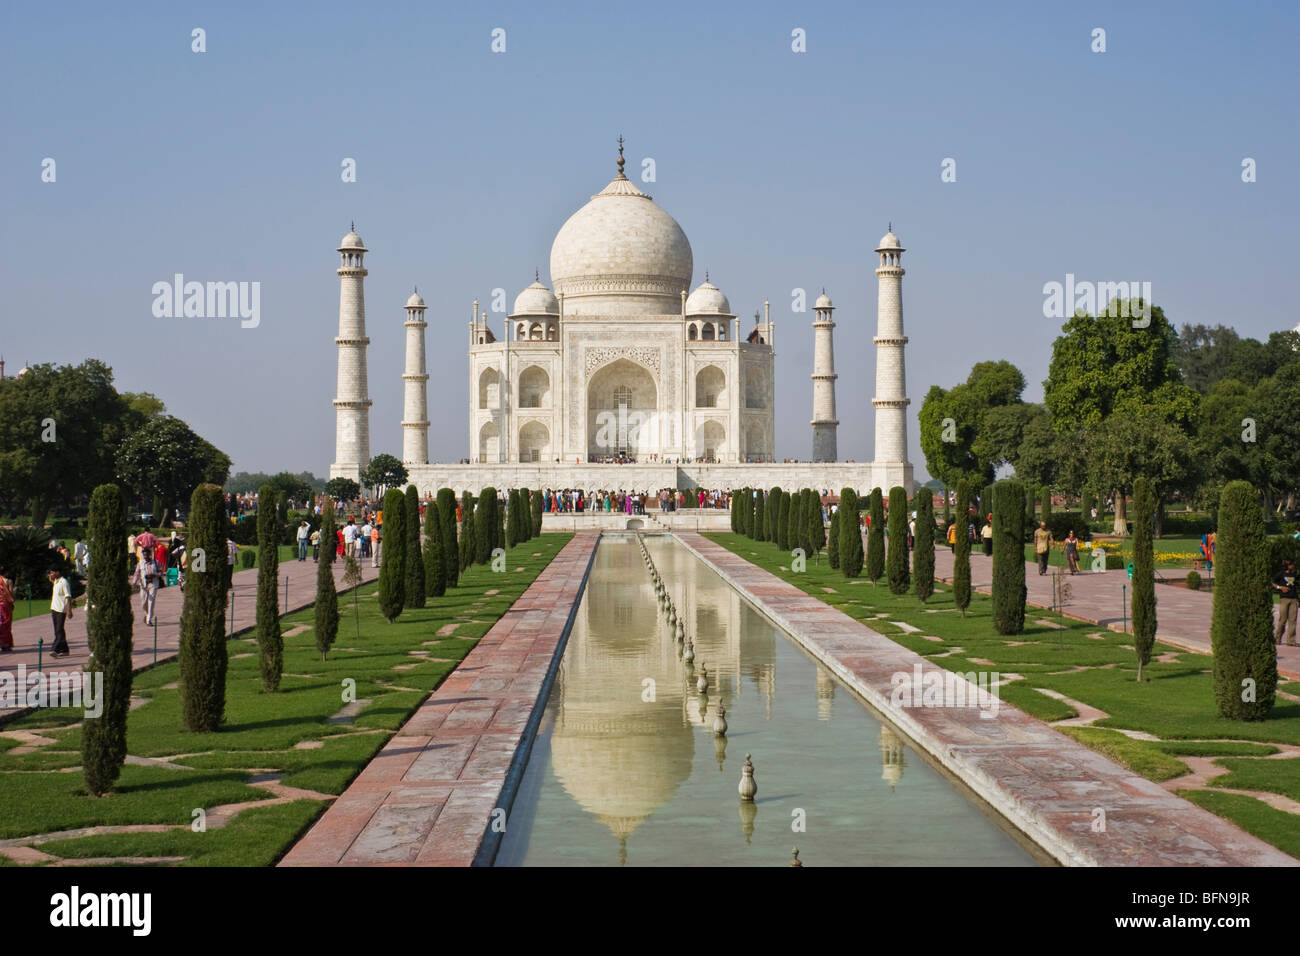 Taj Mahal, Agra, India - maravilla del mundo. Foto de stock